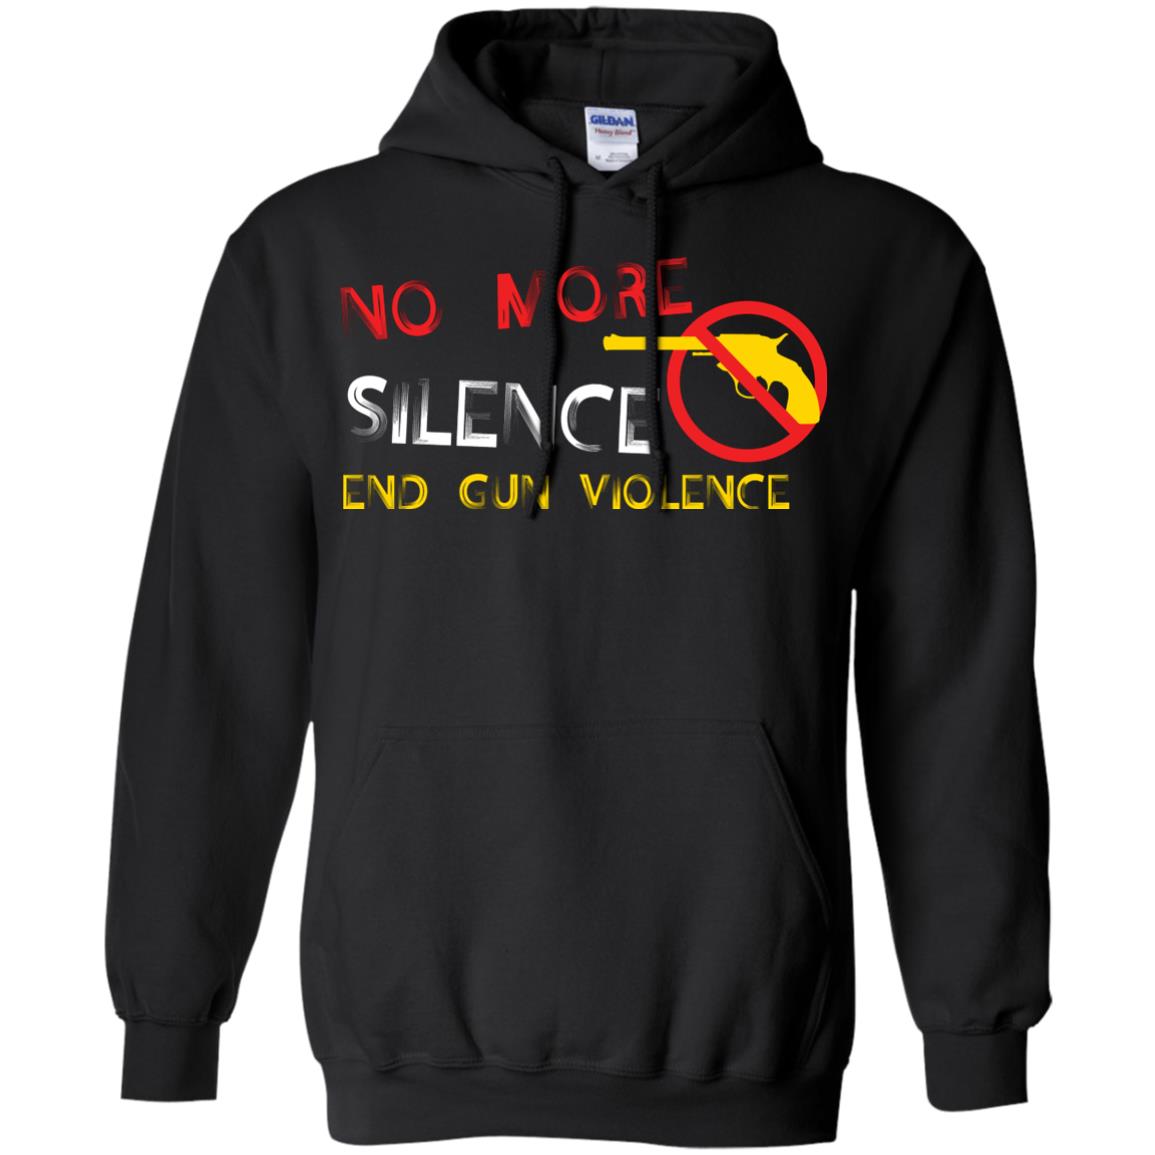 Anti Gun T-shirt No More Silence End Gun Violence